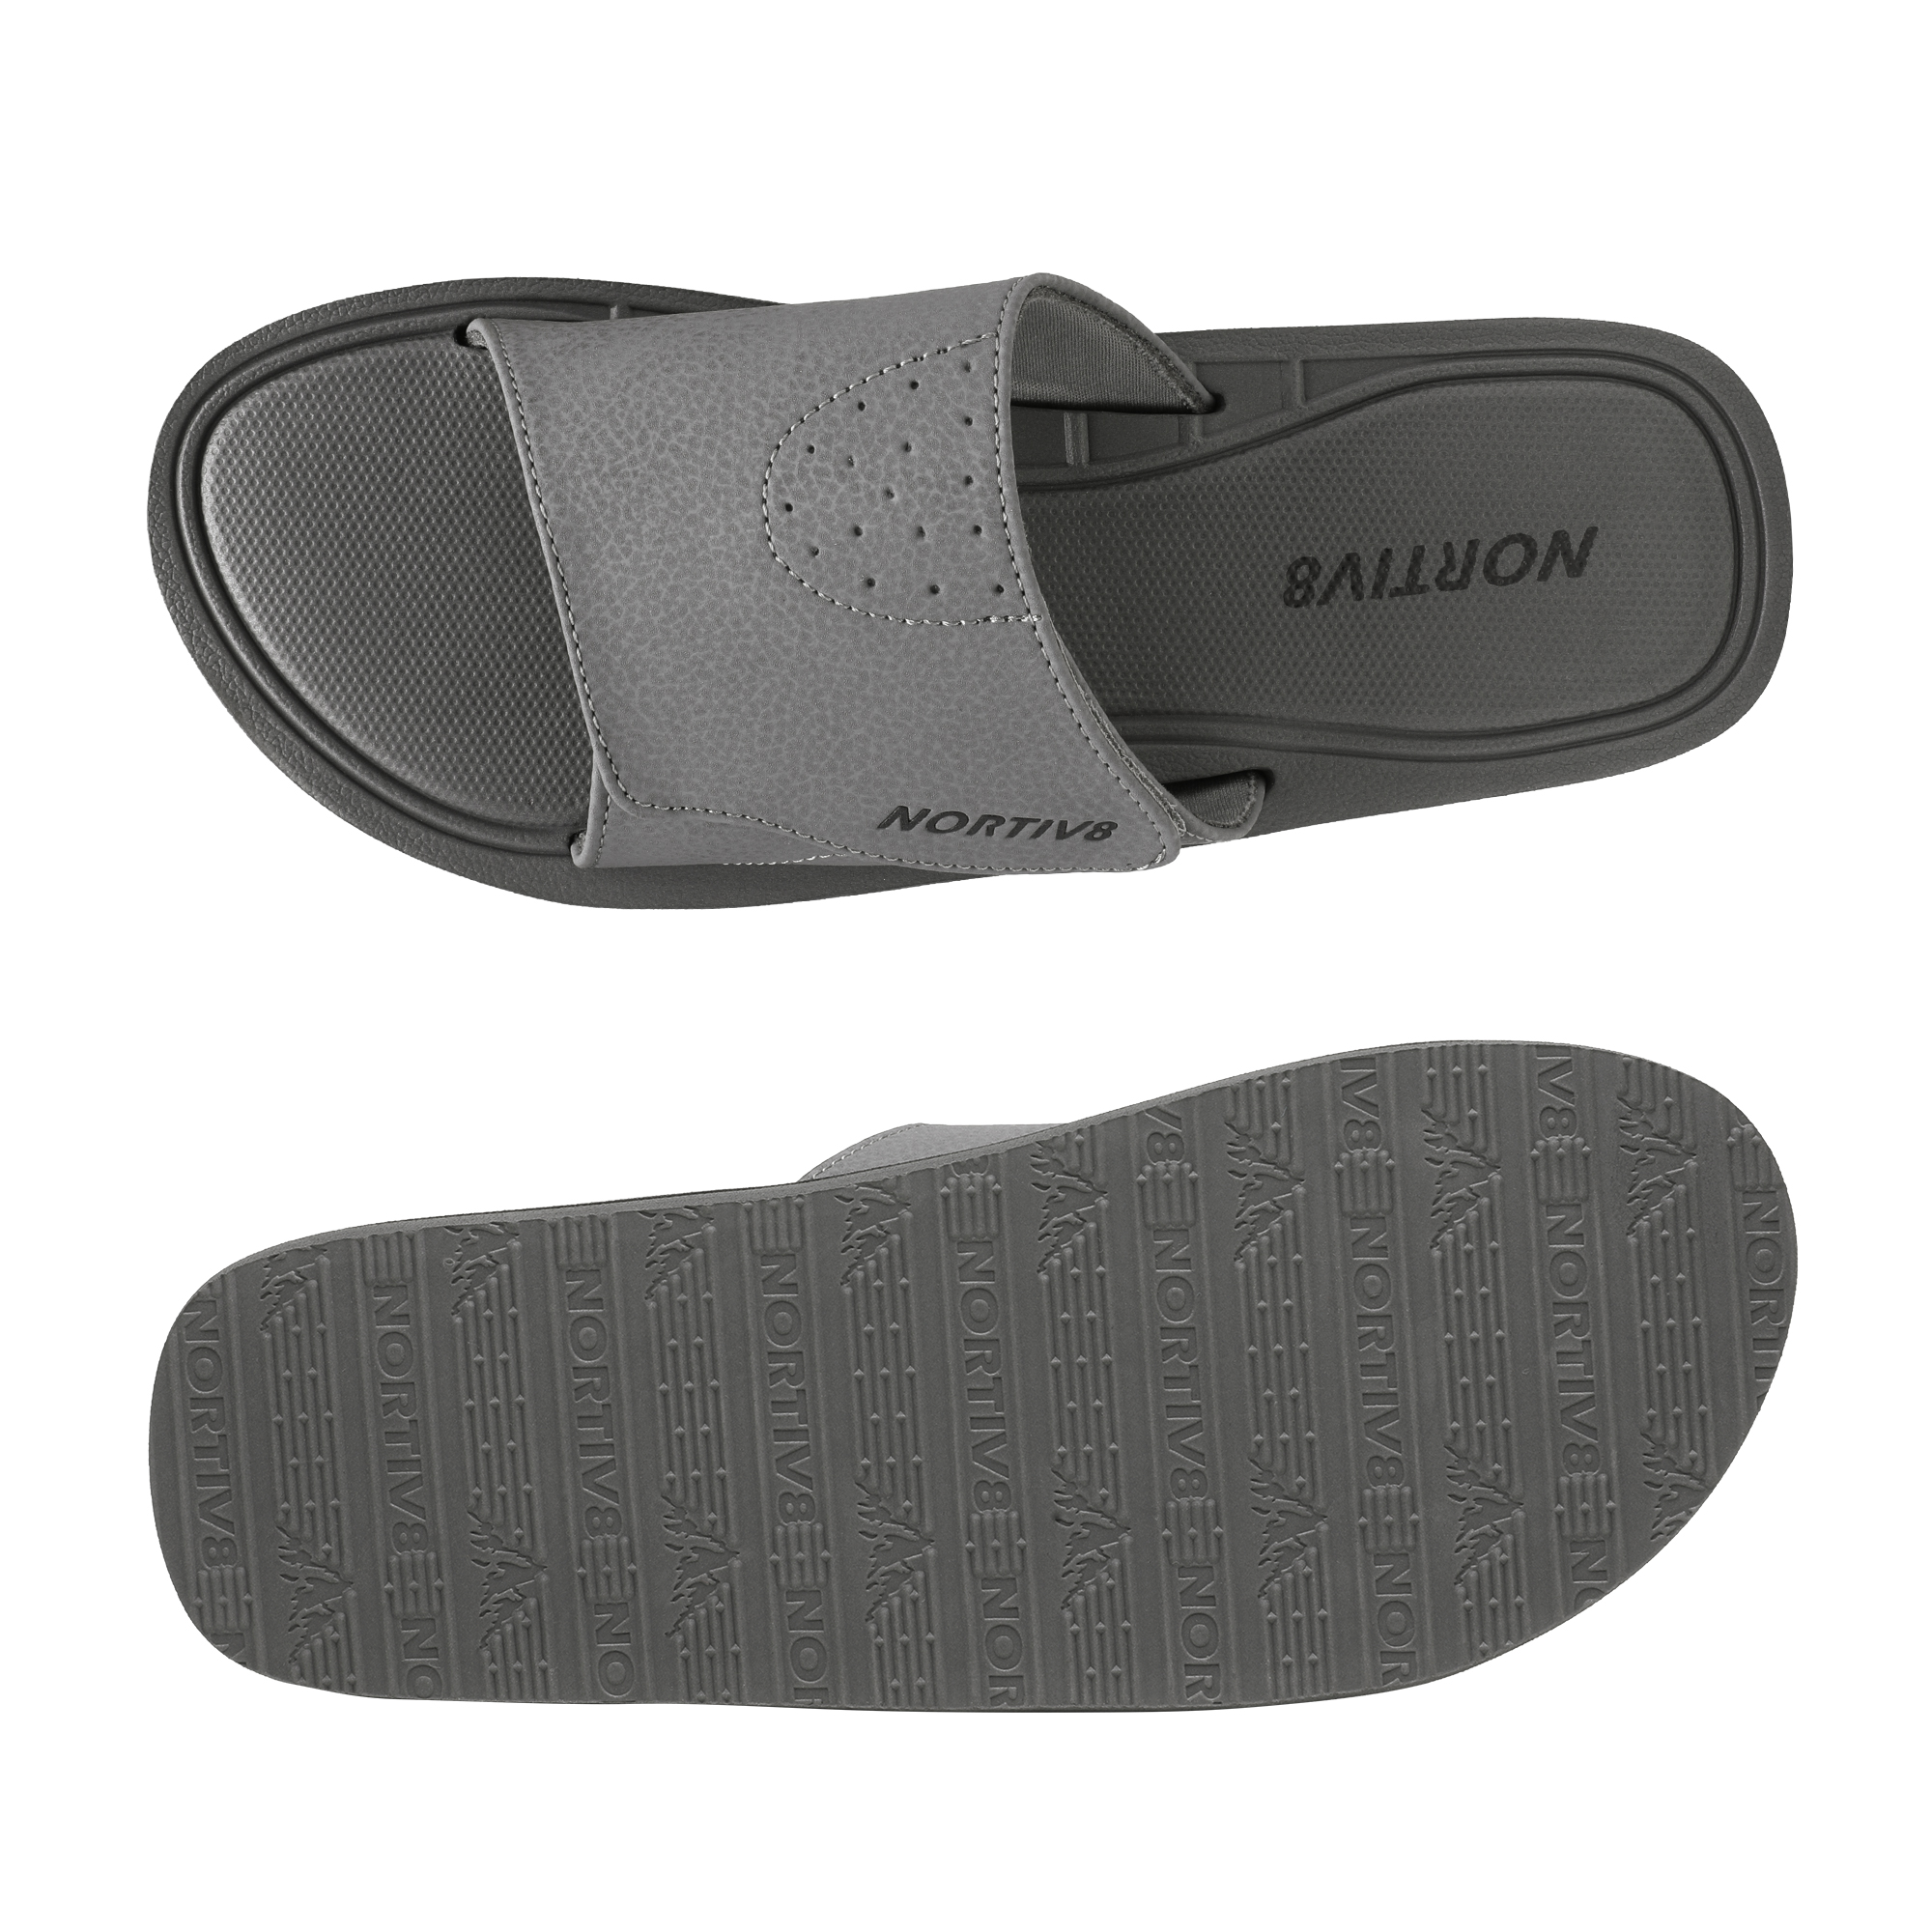 Nortiv8 Men's Memory Foam Adjustable Slide Sandals Comfort Lightweight Summer Beach Sandals Shoes FUSION GREY Size 9 - image 3 of 5